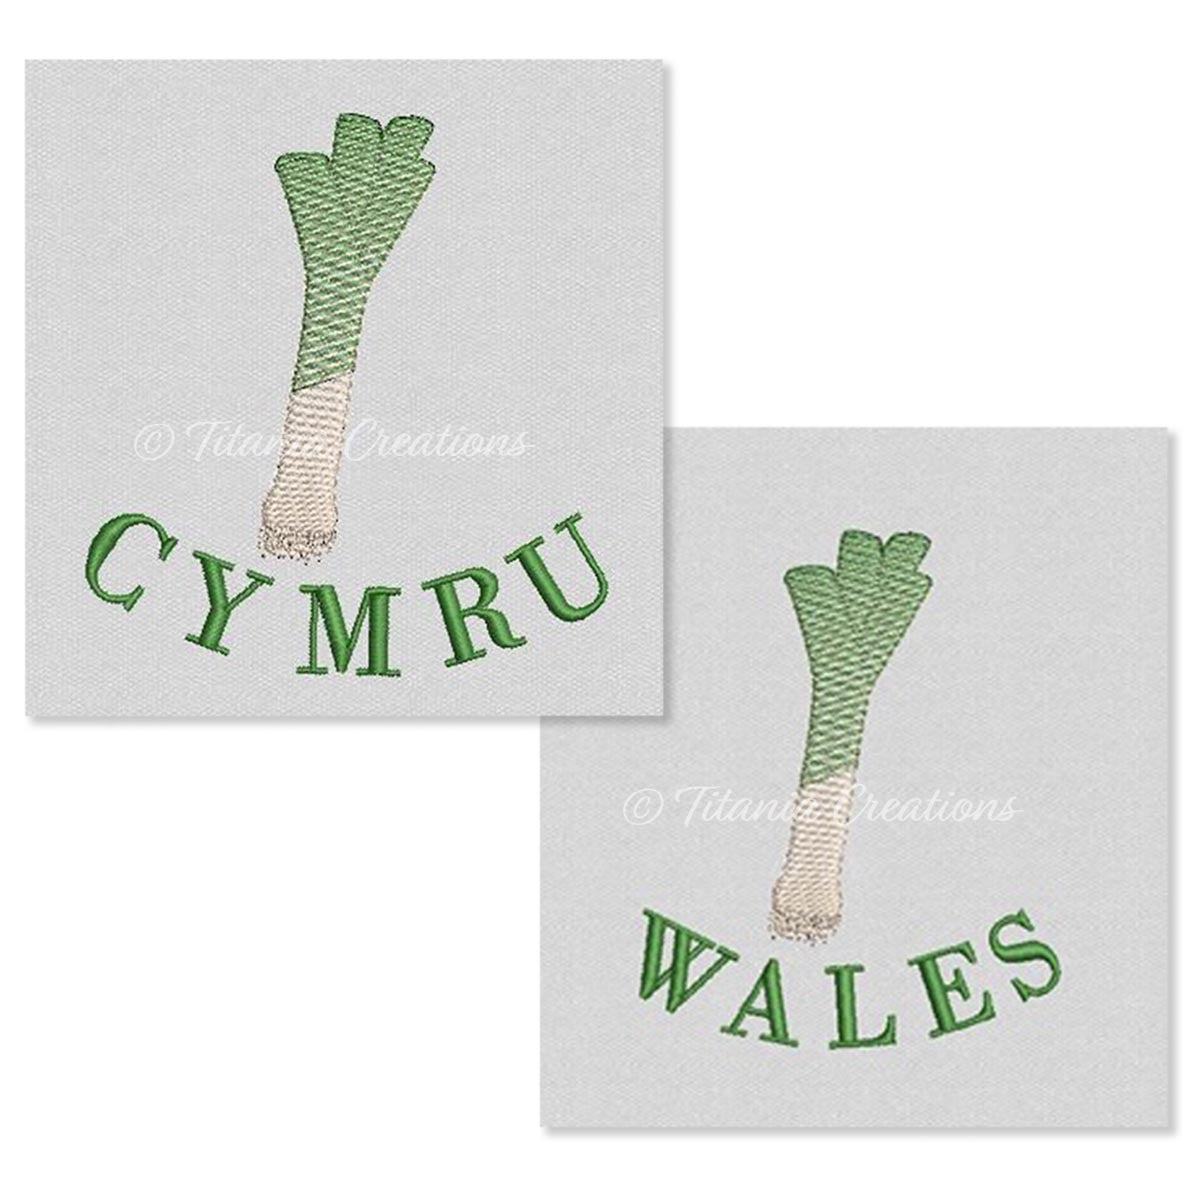 Welsh Leek WALES / CYMRU 4x4